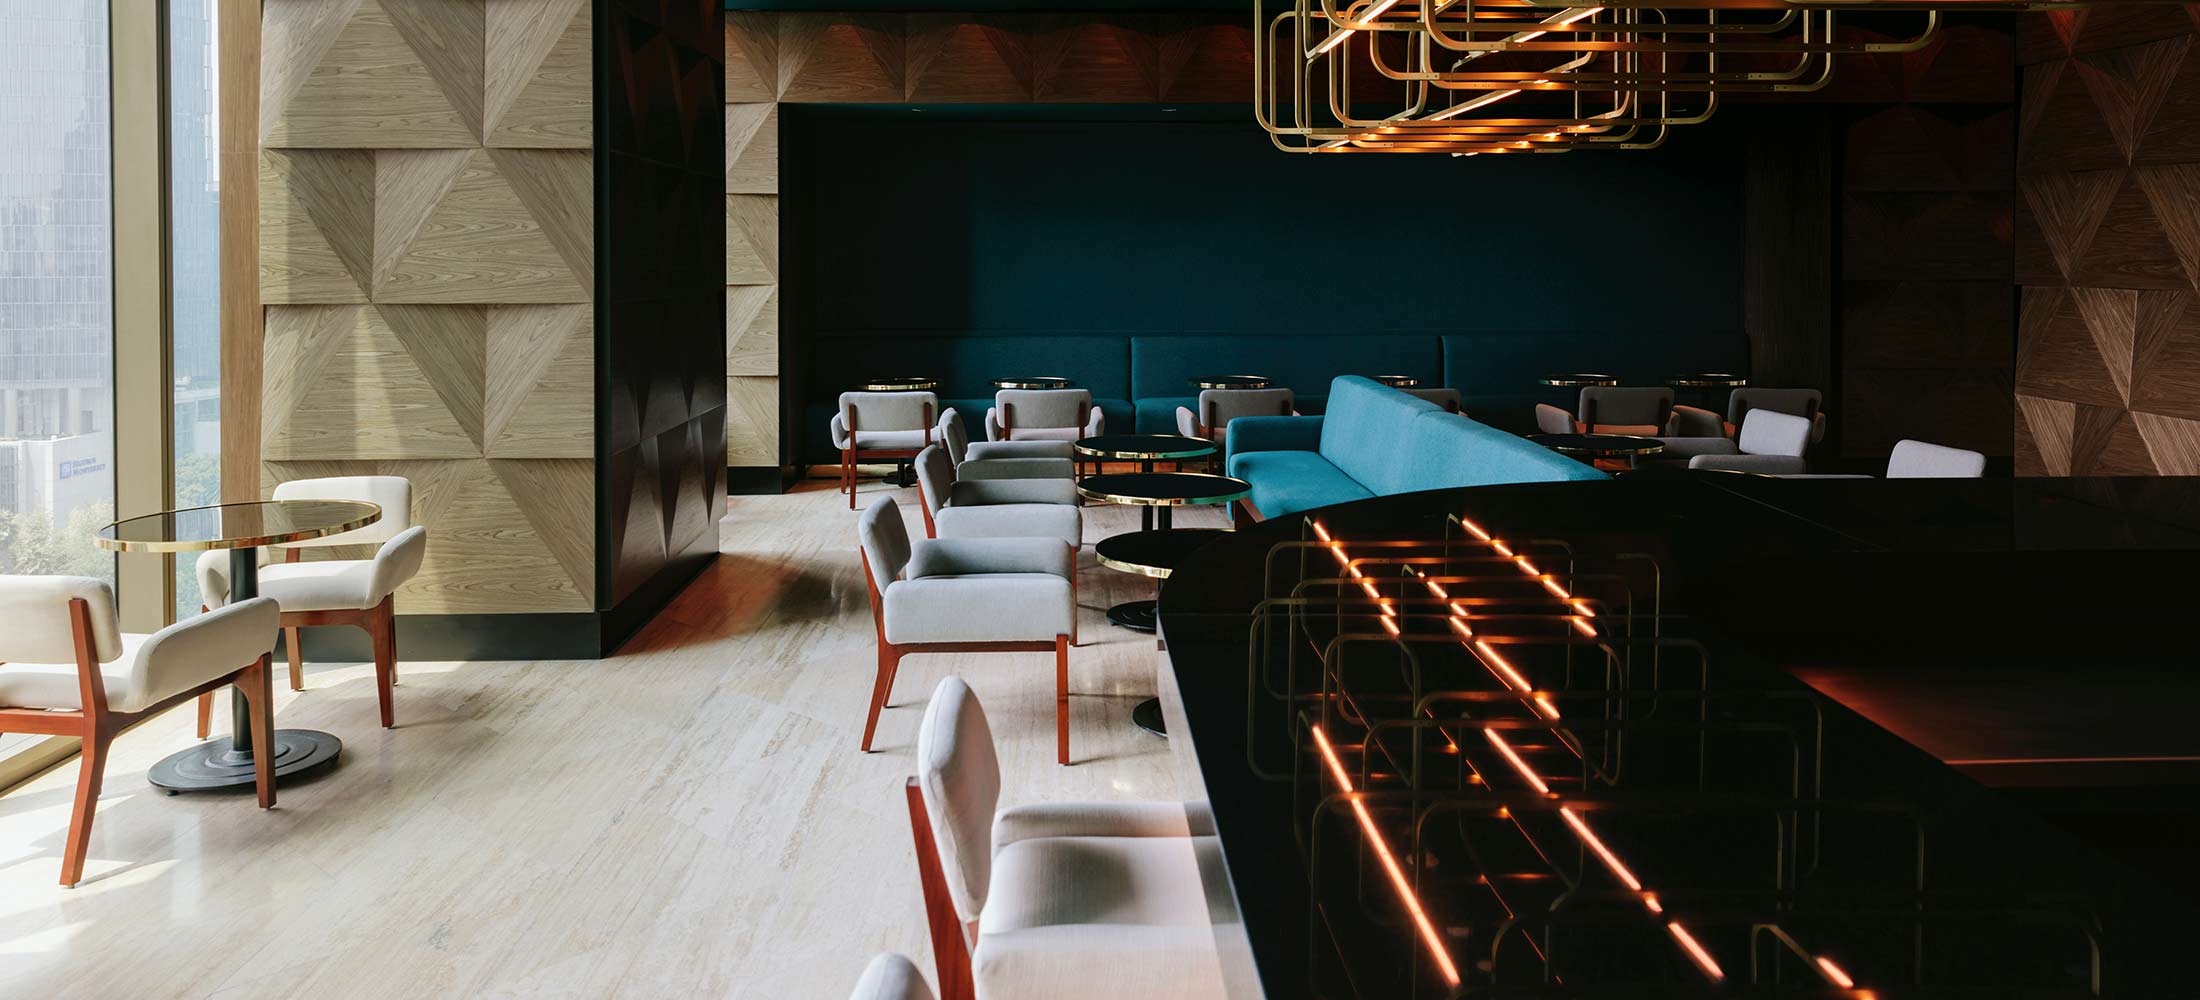 Photo of the hotel Sofitel Mexico City Reforma: Slide sofitel mexico lobby bar 1